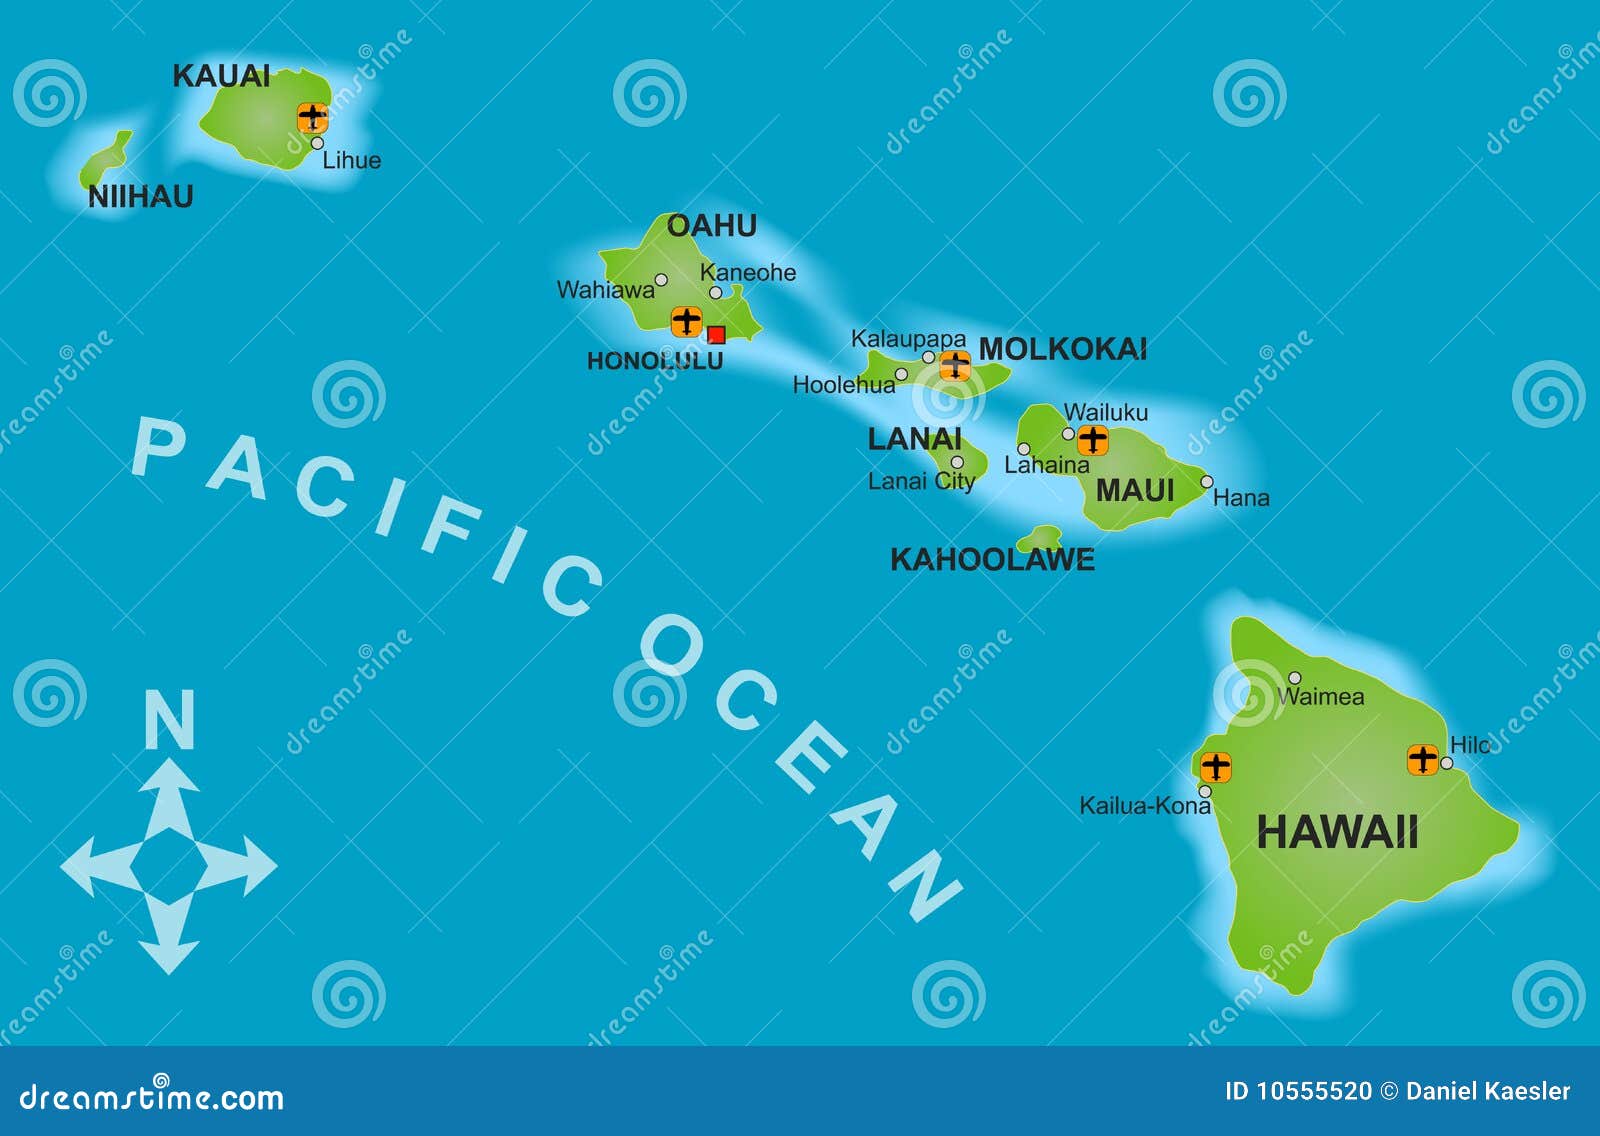 Гавайи какая страна. Штат Гавайи на карте. Остров Гавайи на карте. Гавайские острова карта.